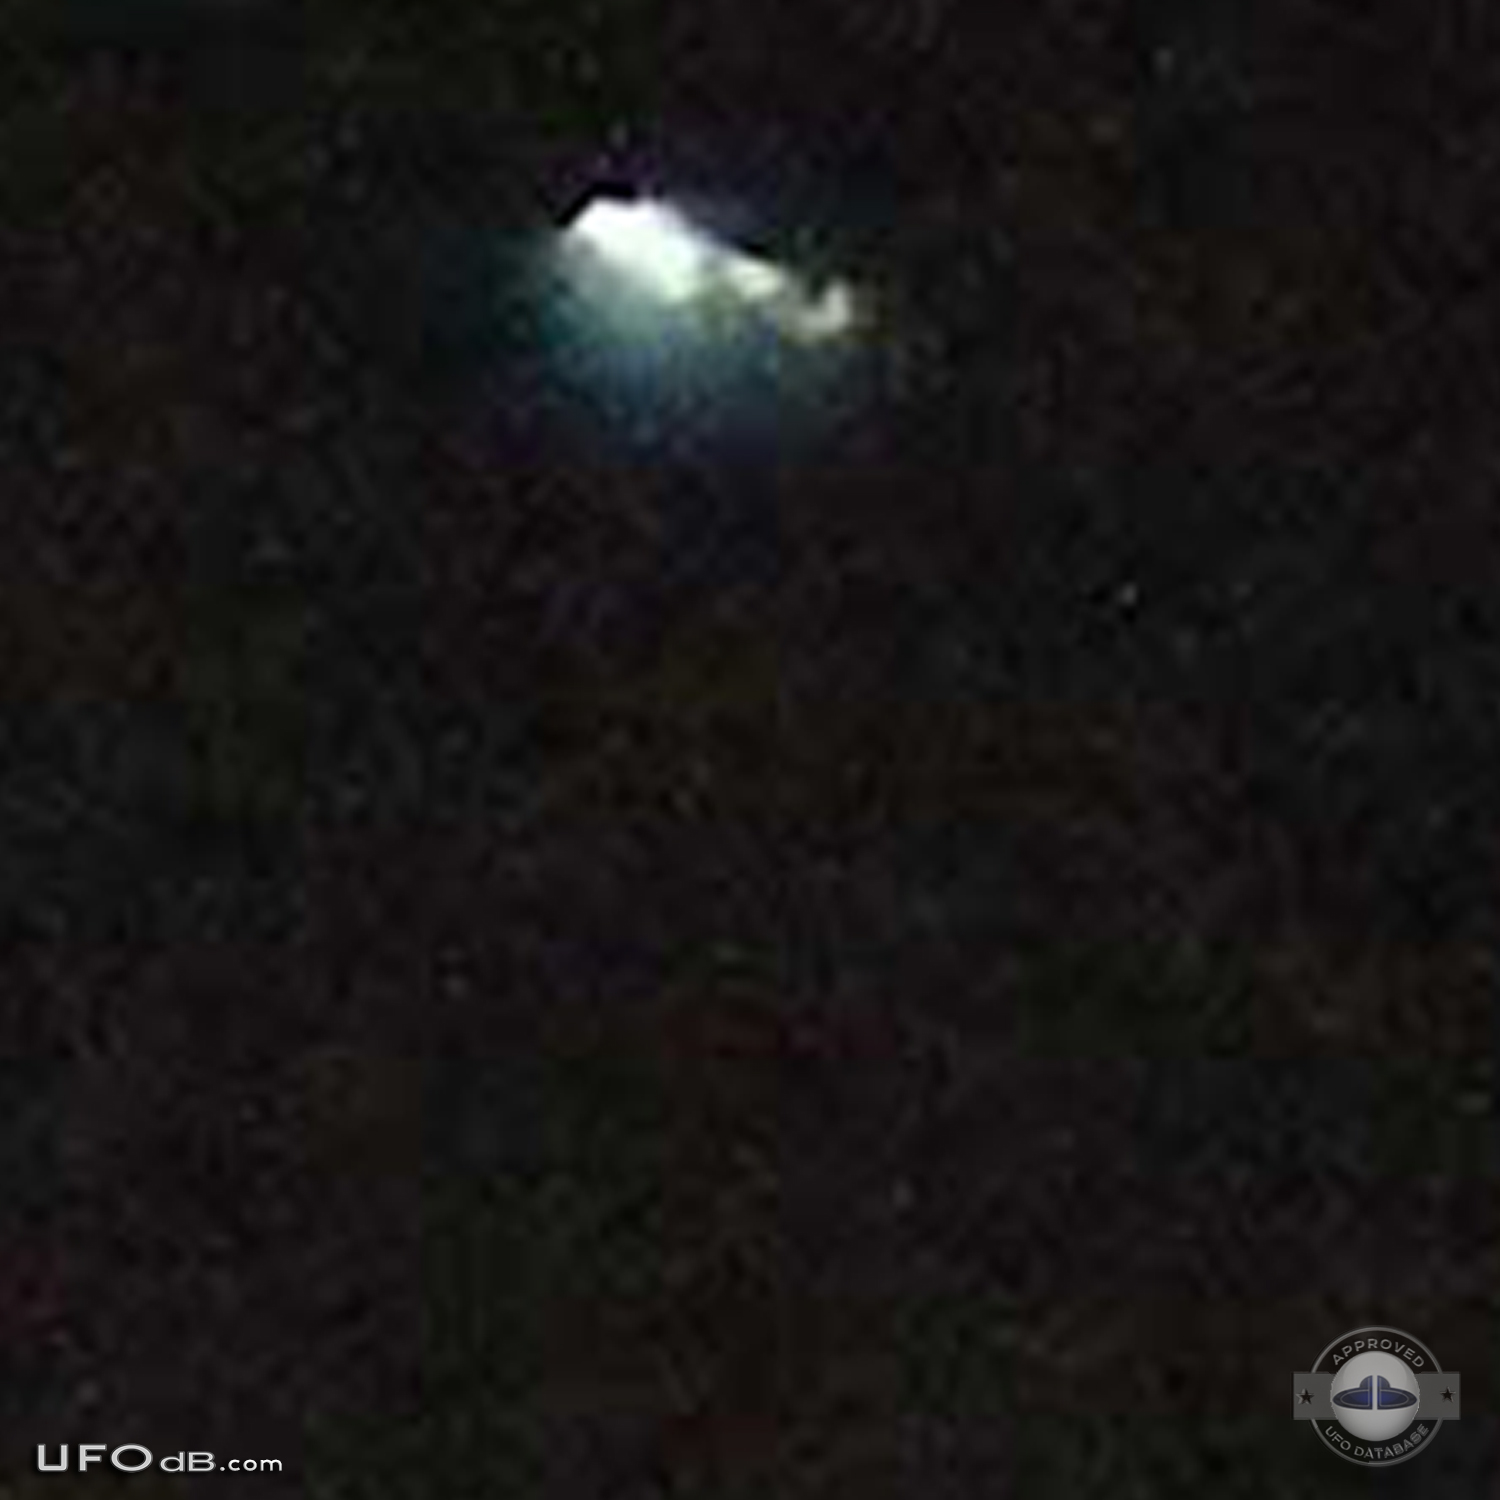 Moon picture reveals bright UFO in the night sky in Ecuador in 2009 UFO Picture #446-7